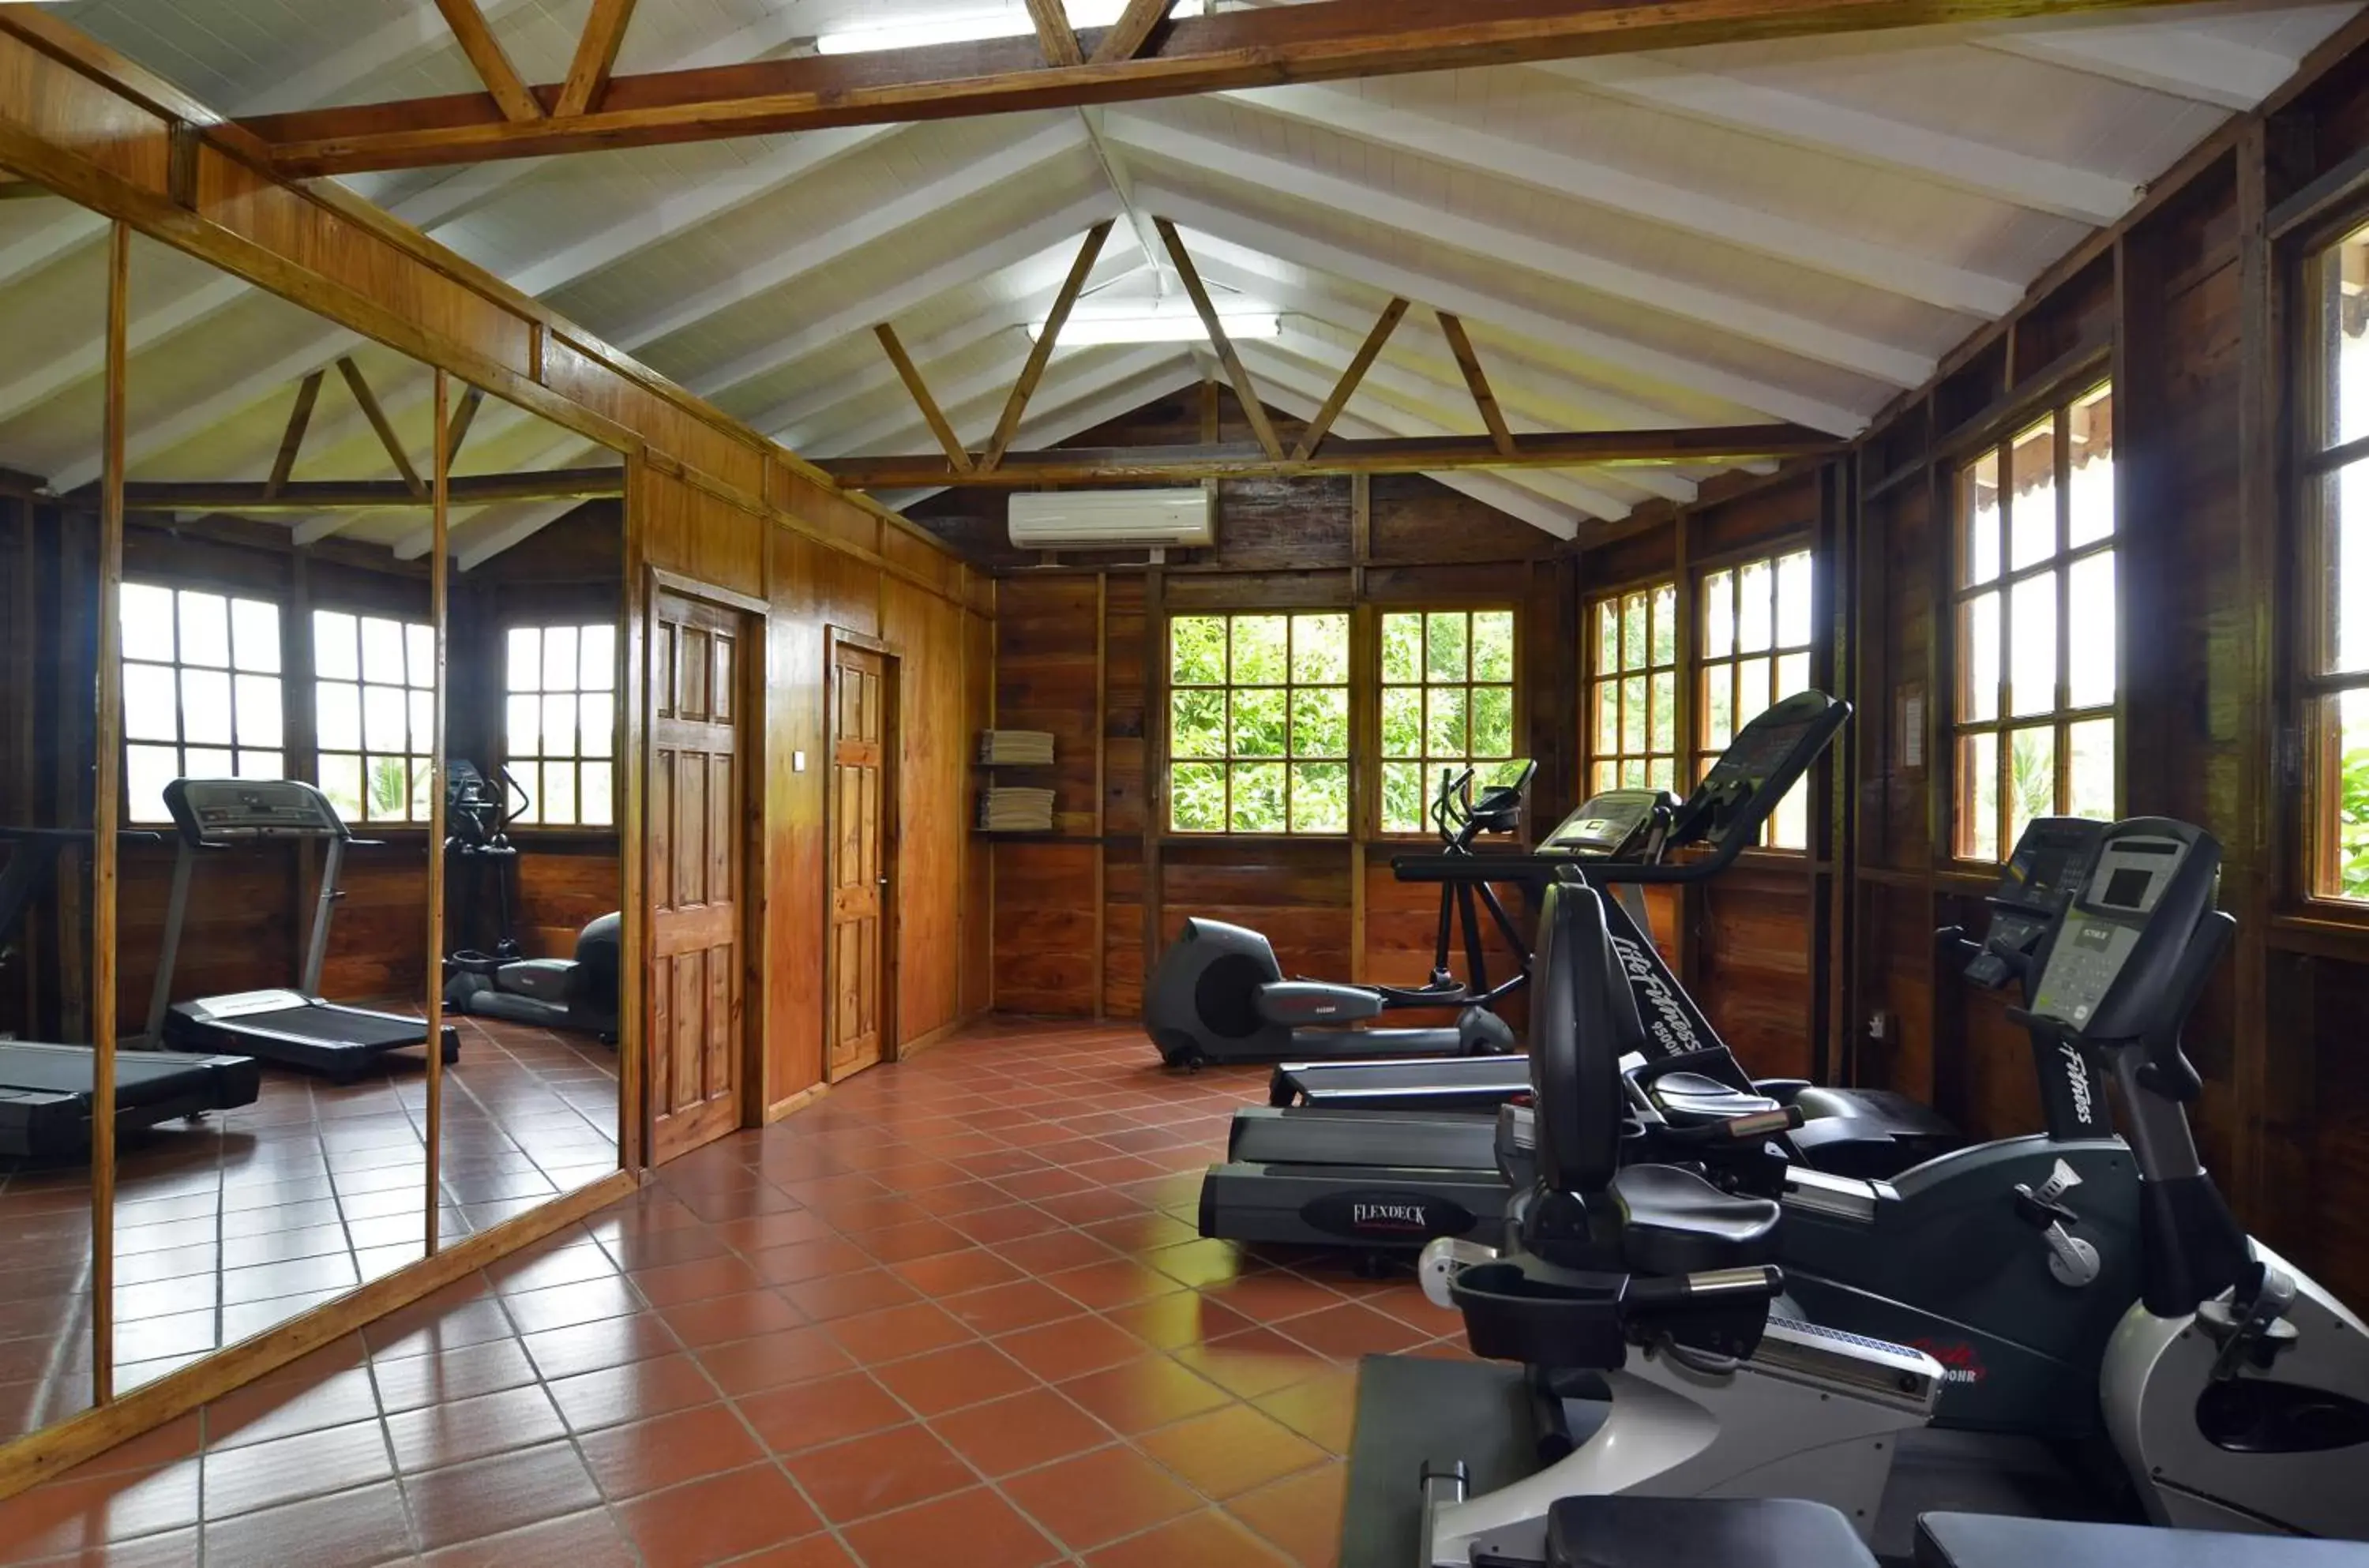 Fitness centre/facilities, Fitness Center/Facilities in Ladera Resort